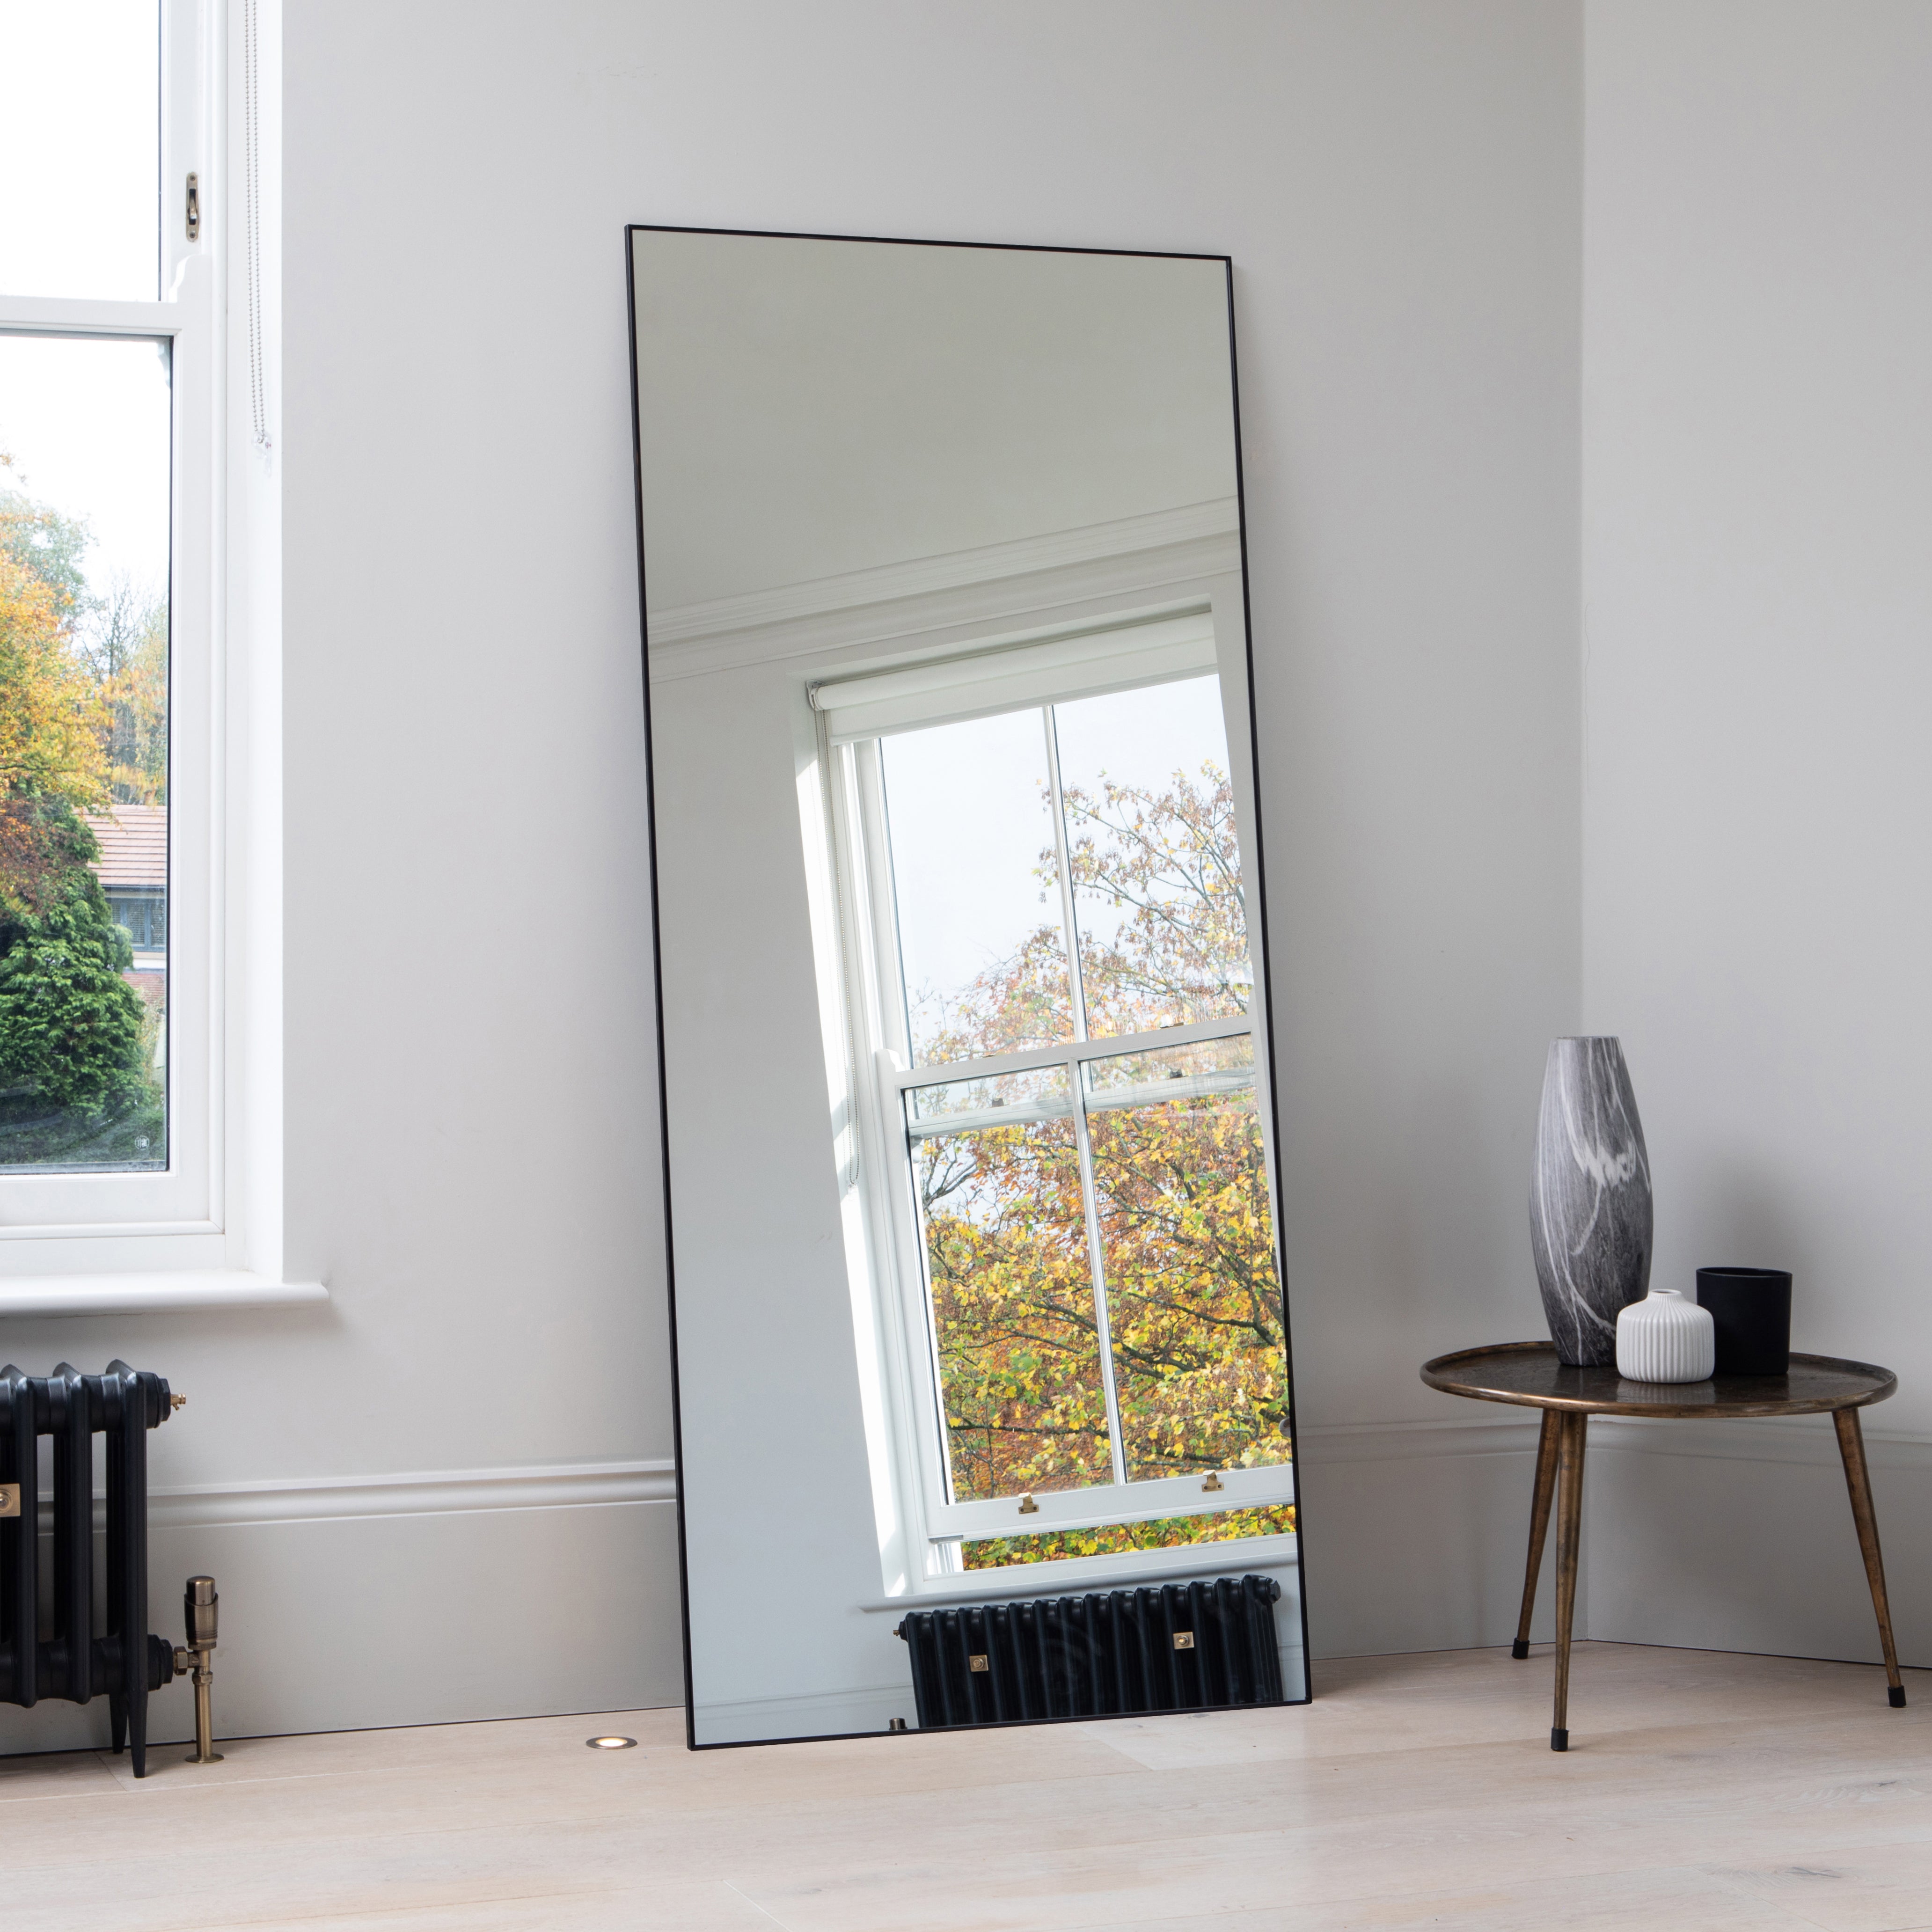 180cm x 80cm black framed aluminium leaner or wall mirror